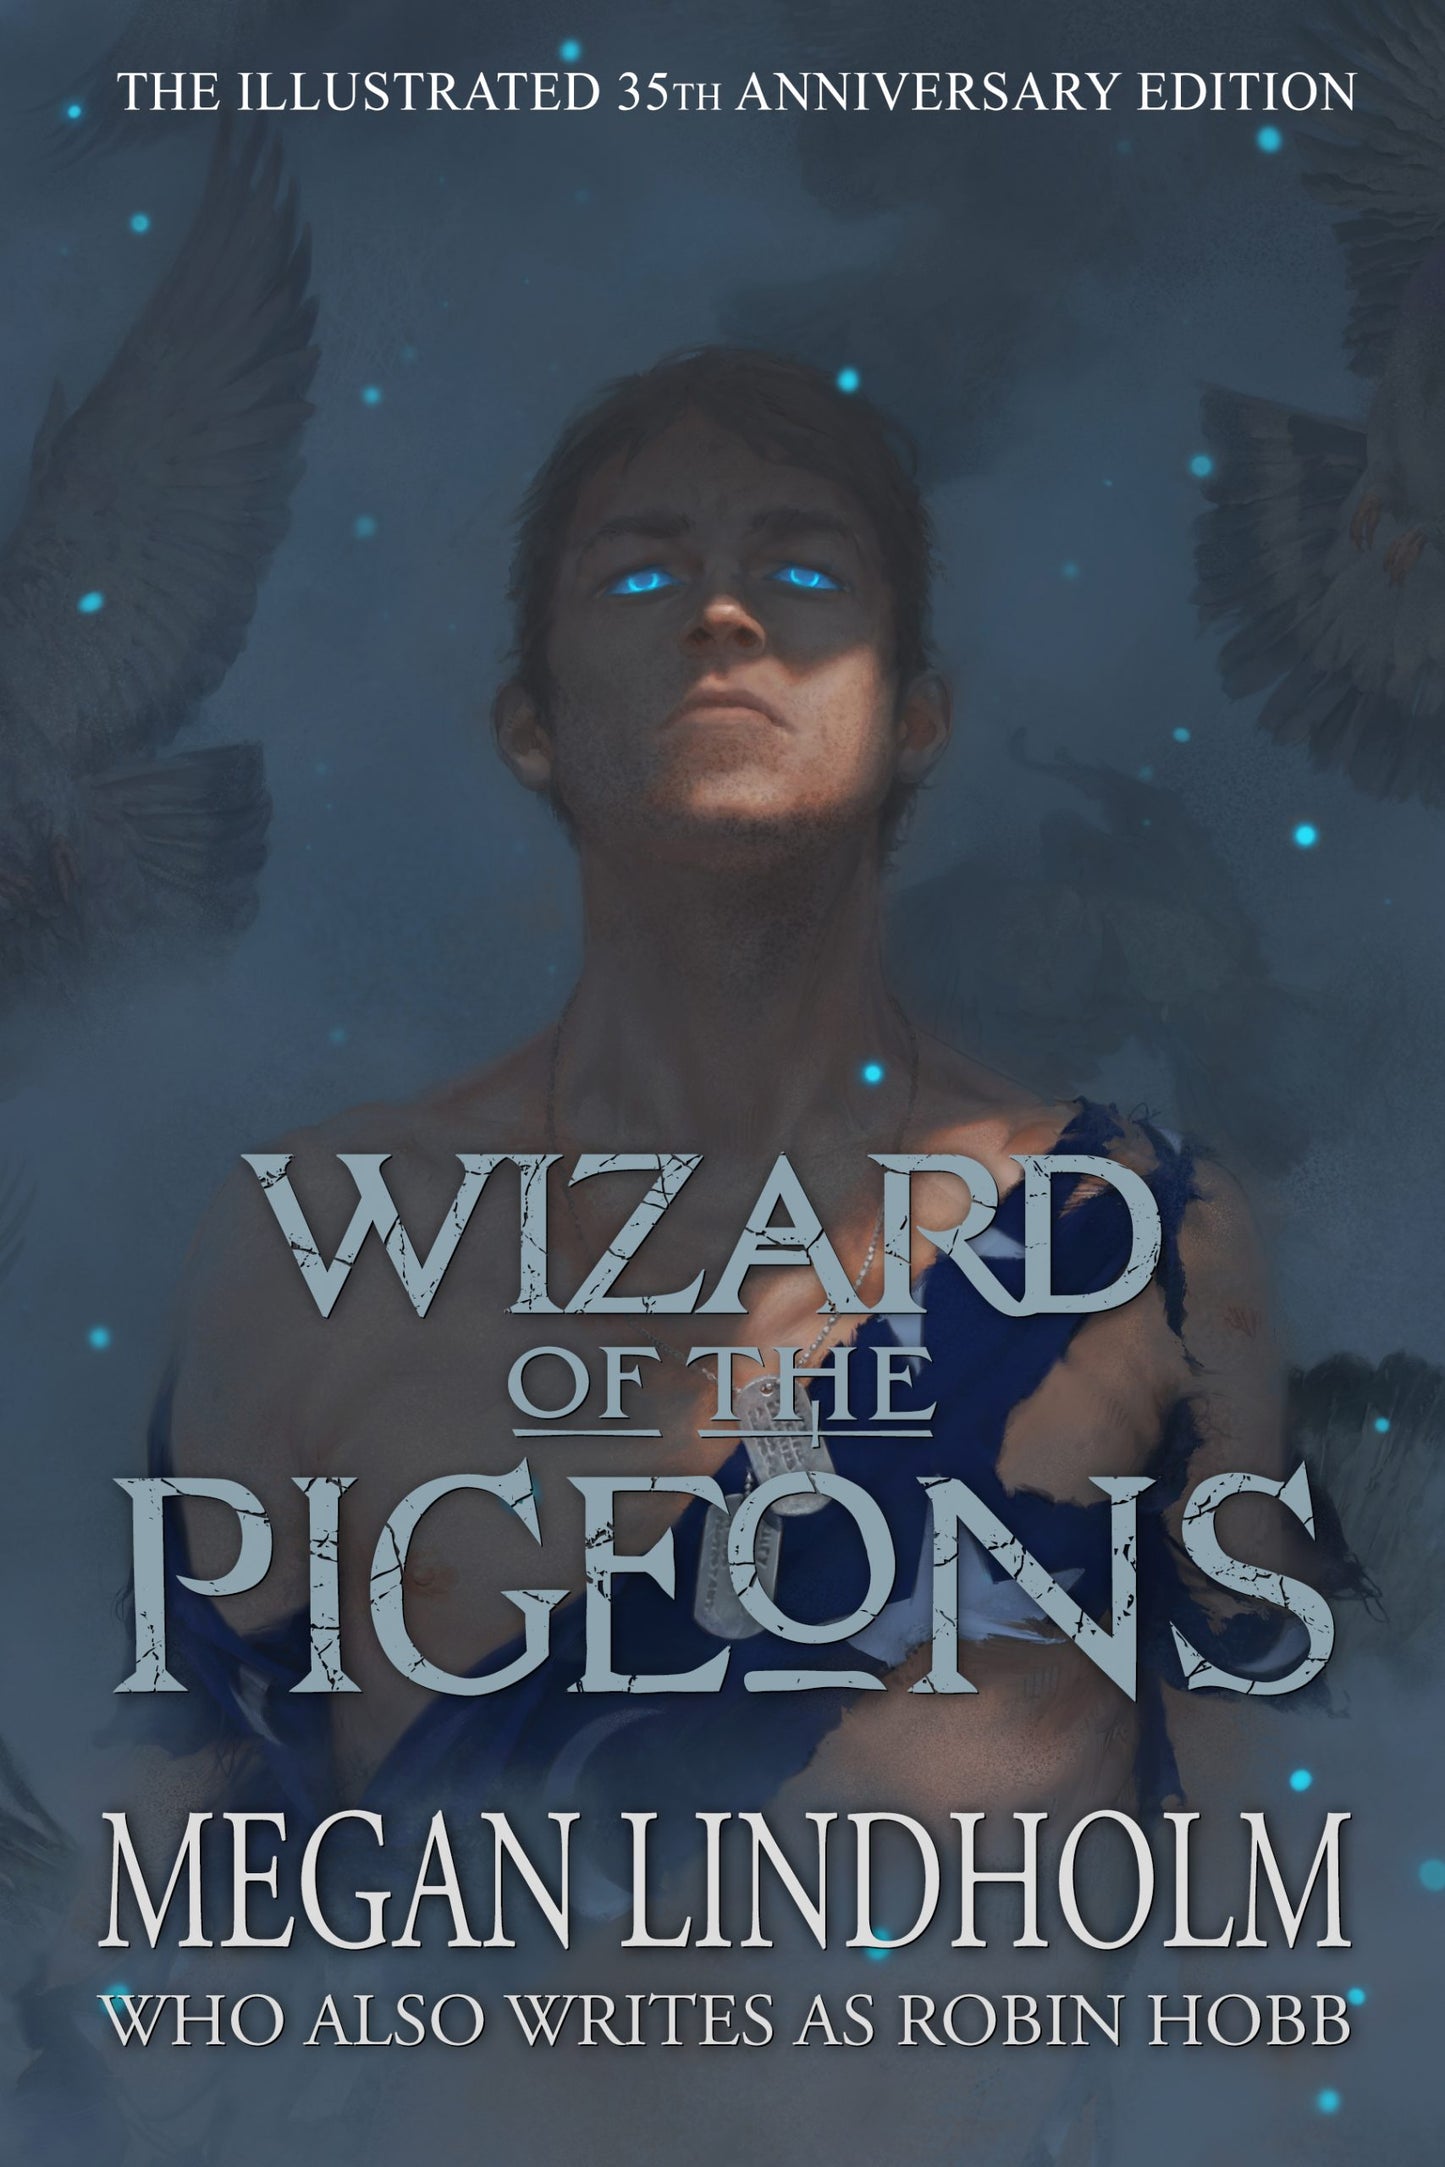 Wizard of the Pigeons by Megan Lindholm (Remarqued)